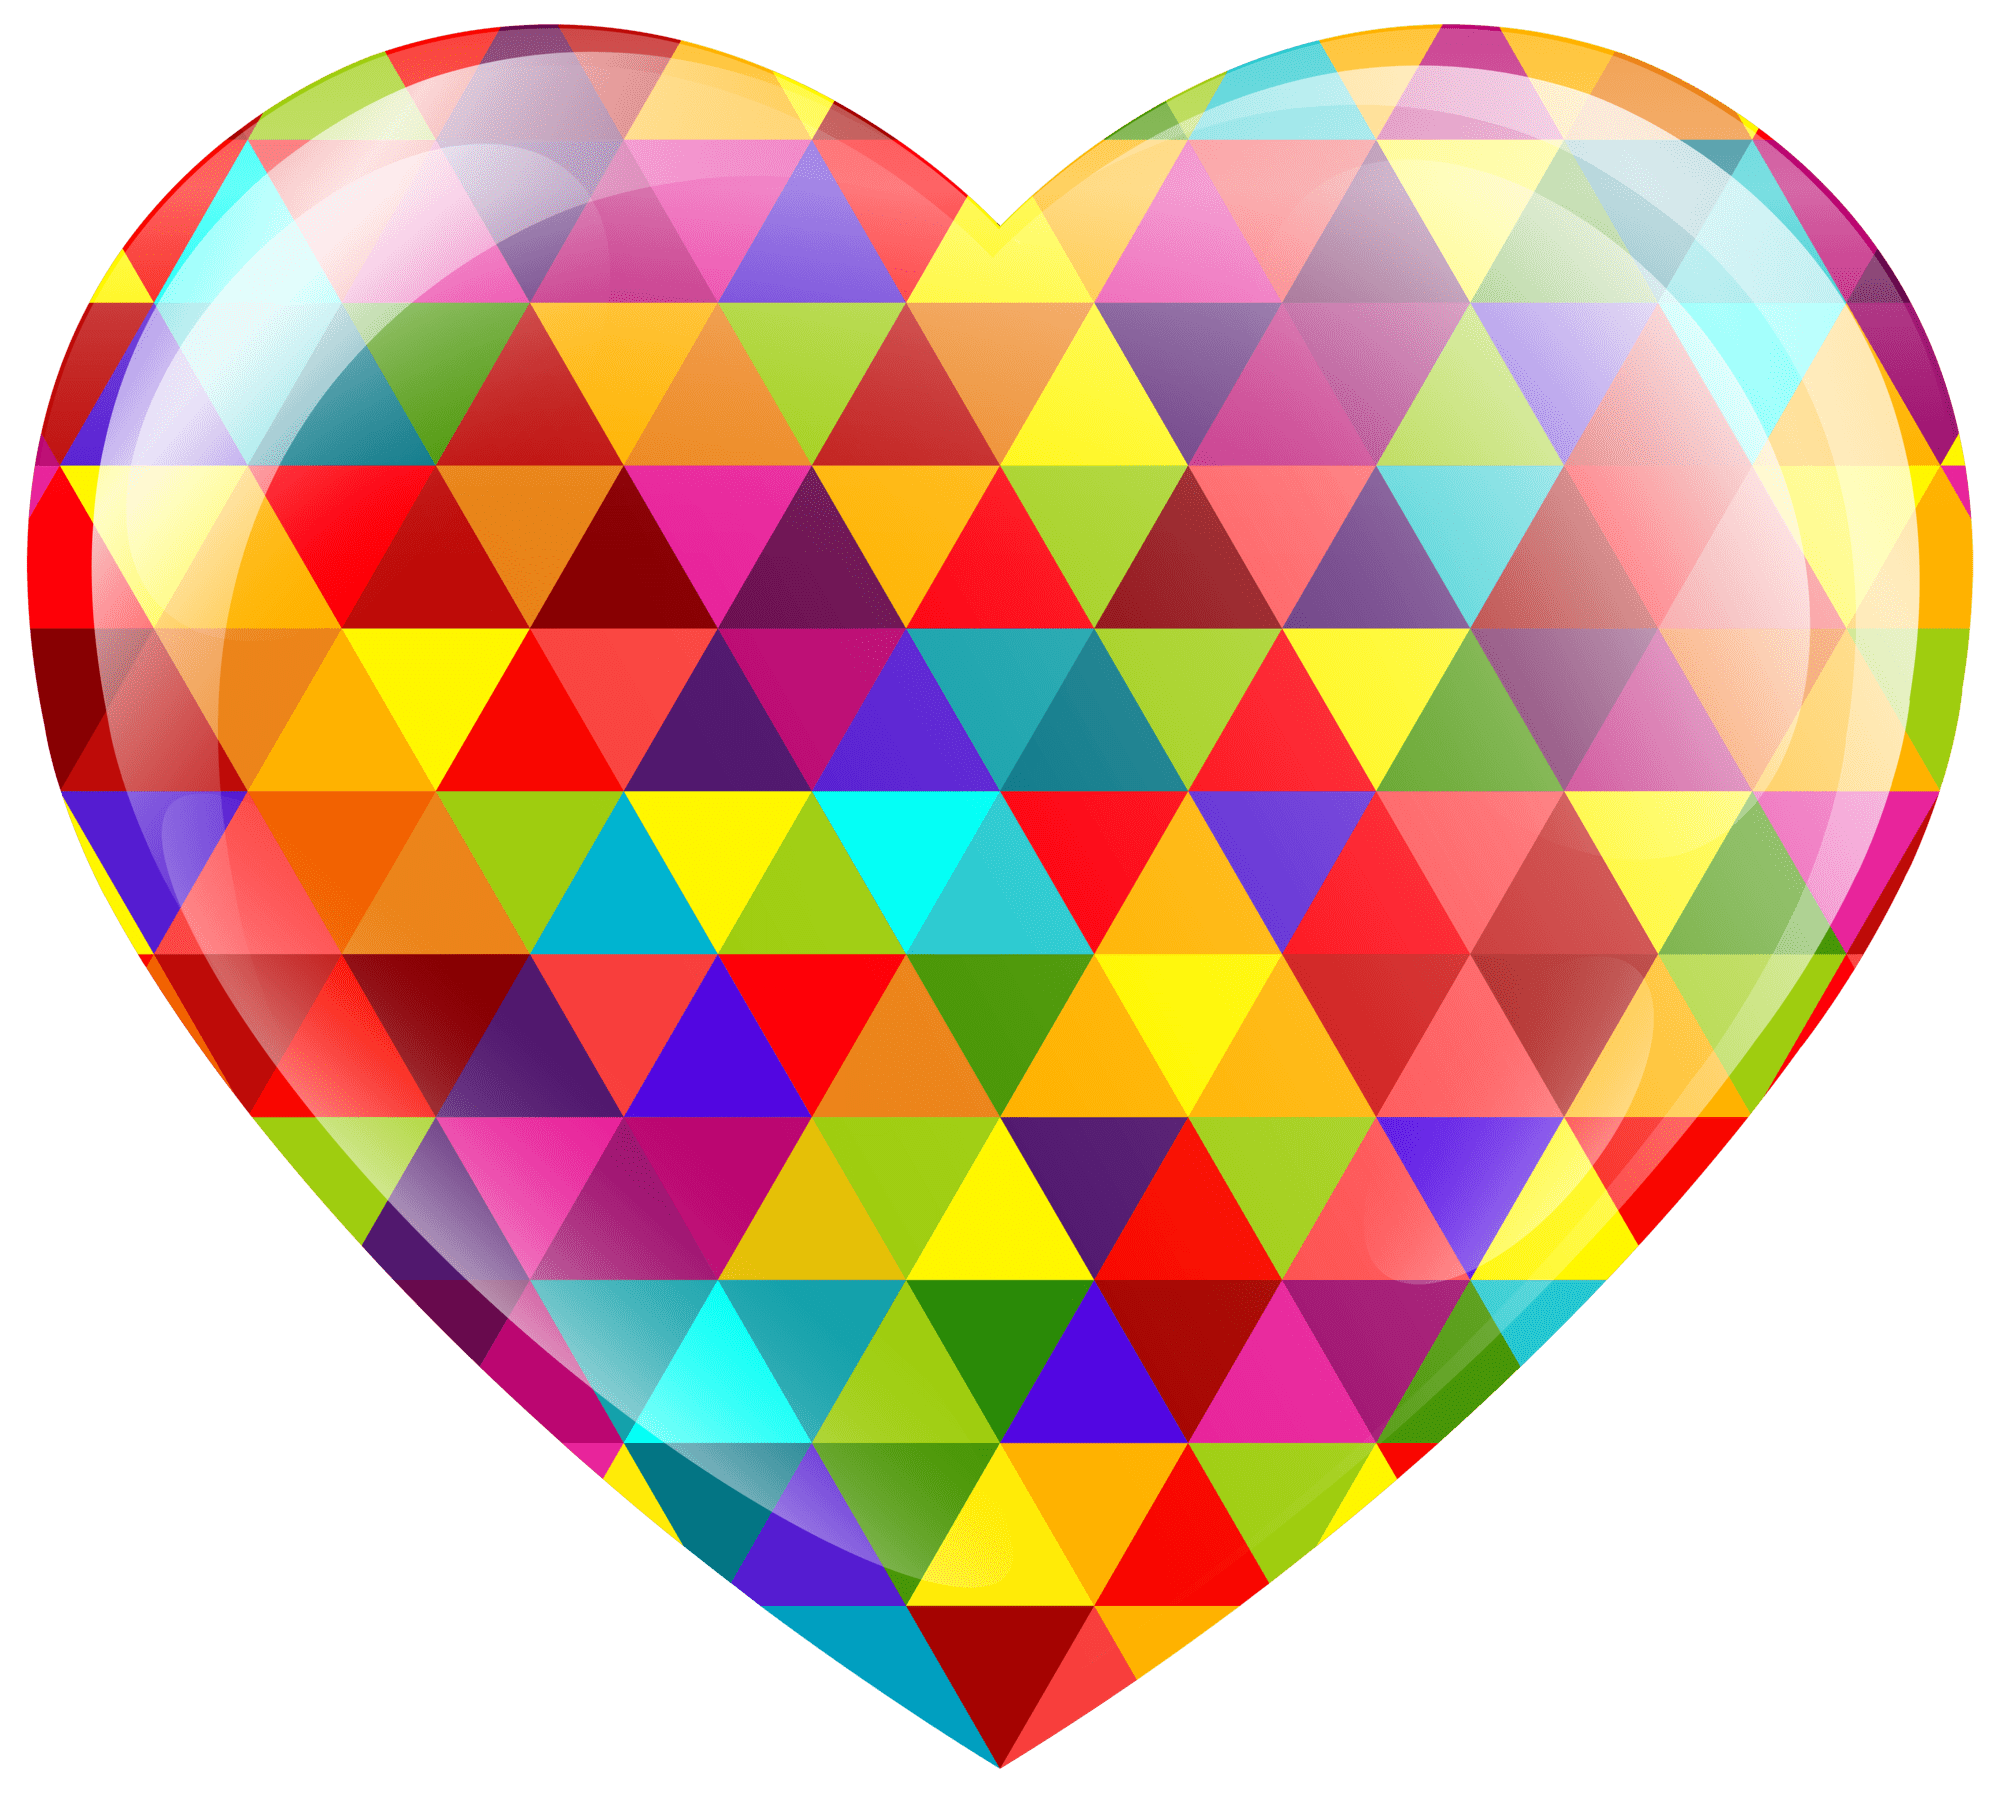 Multicolor Heart PNG Clip Art Image